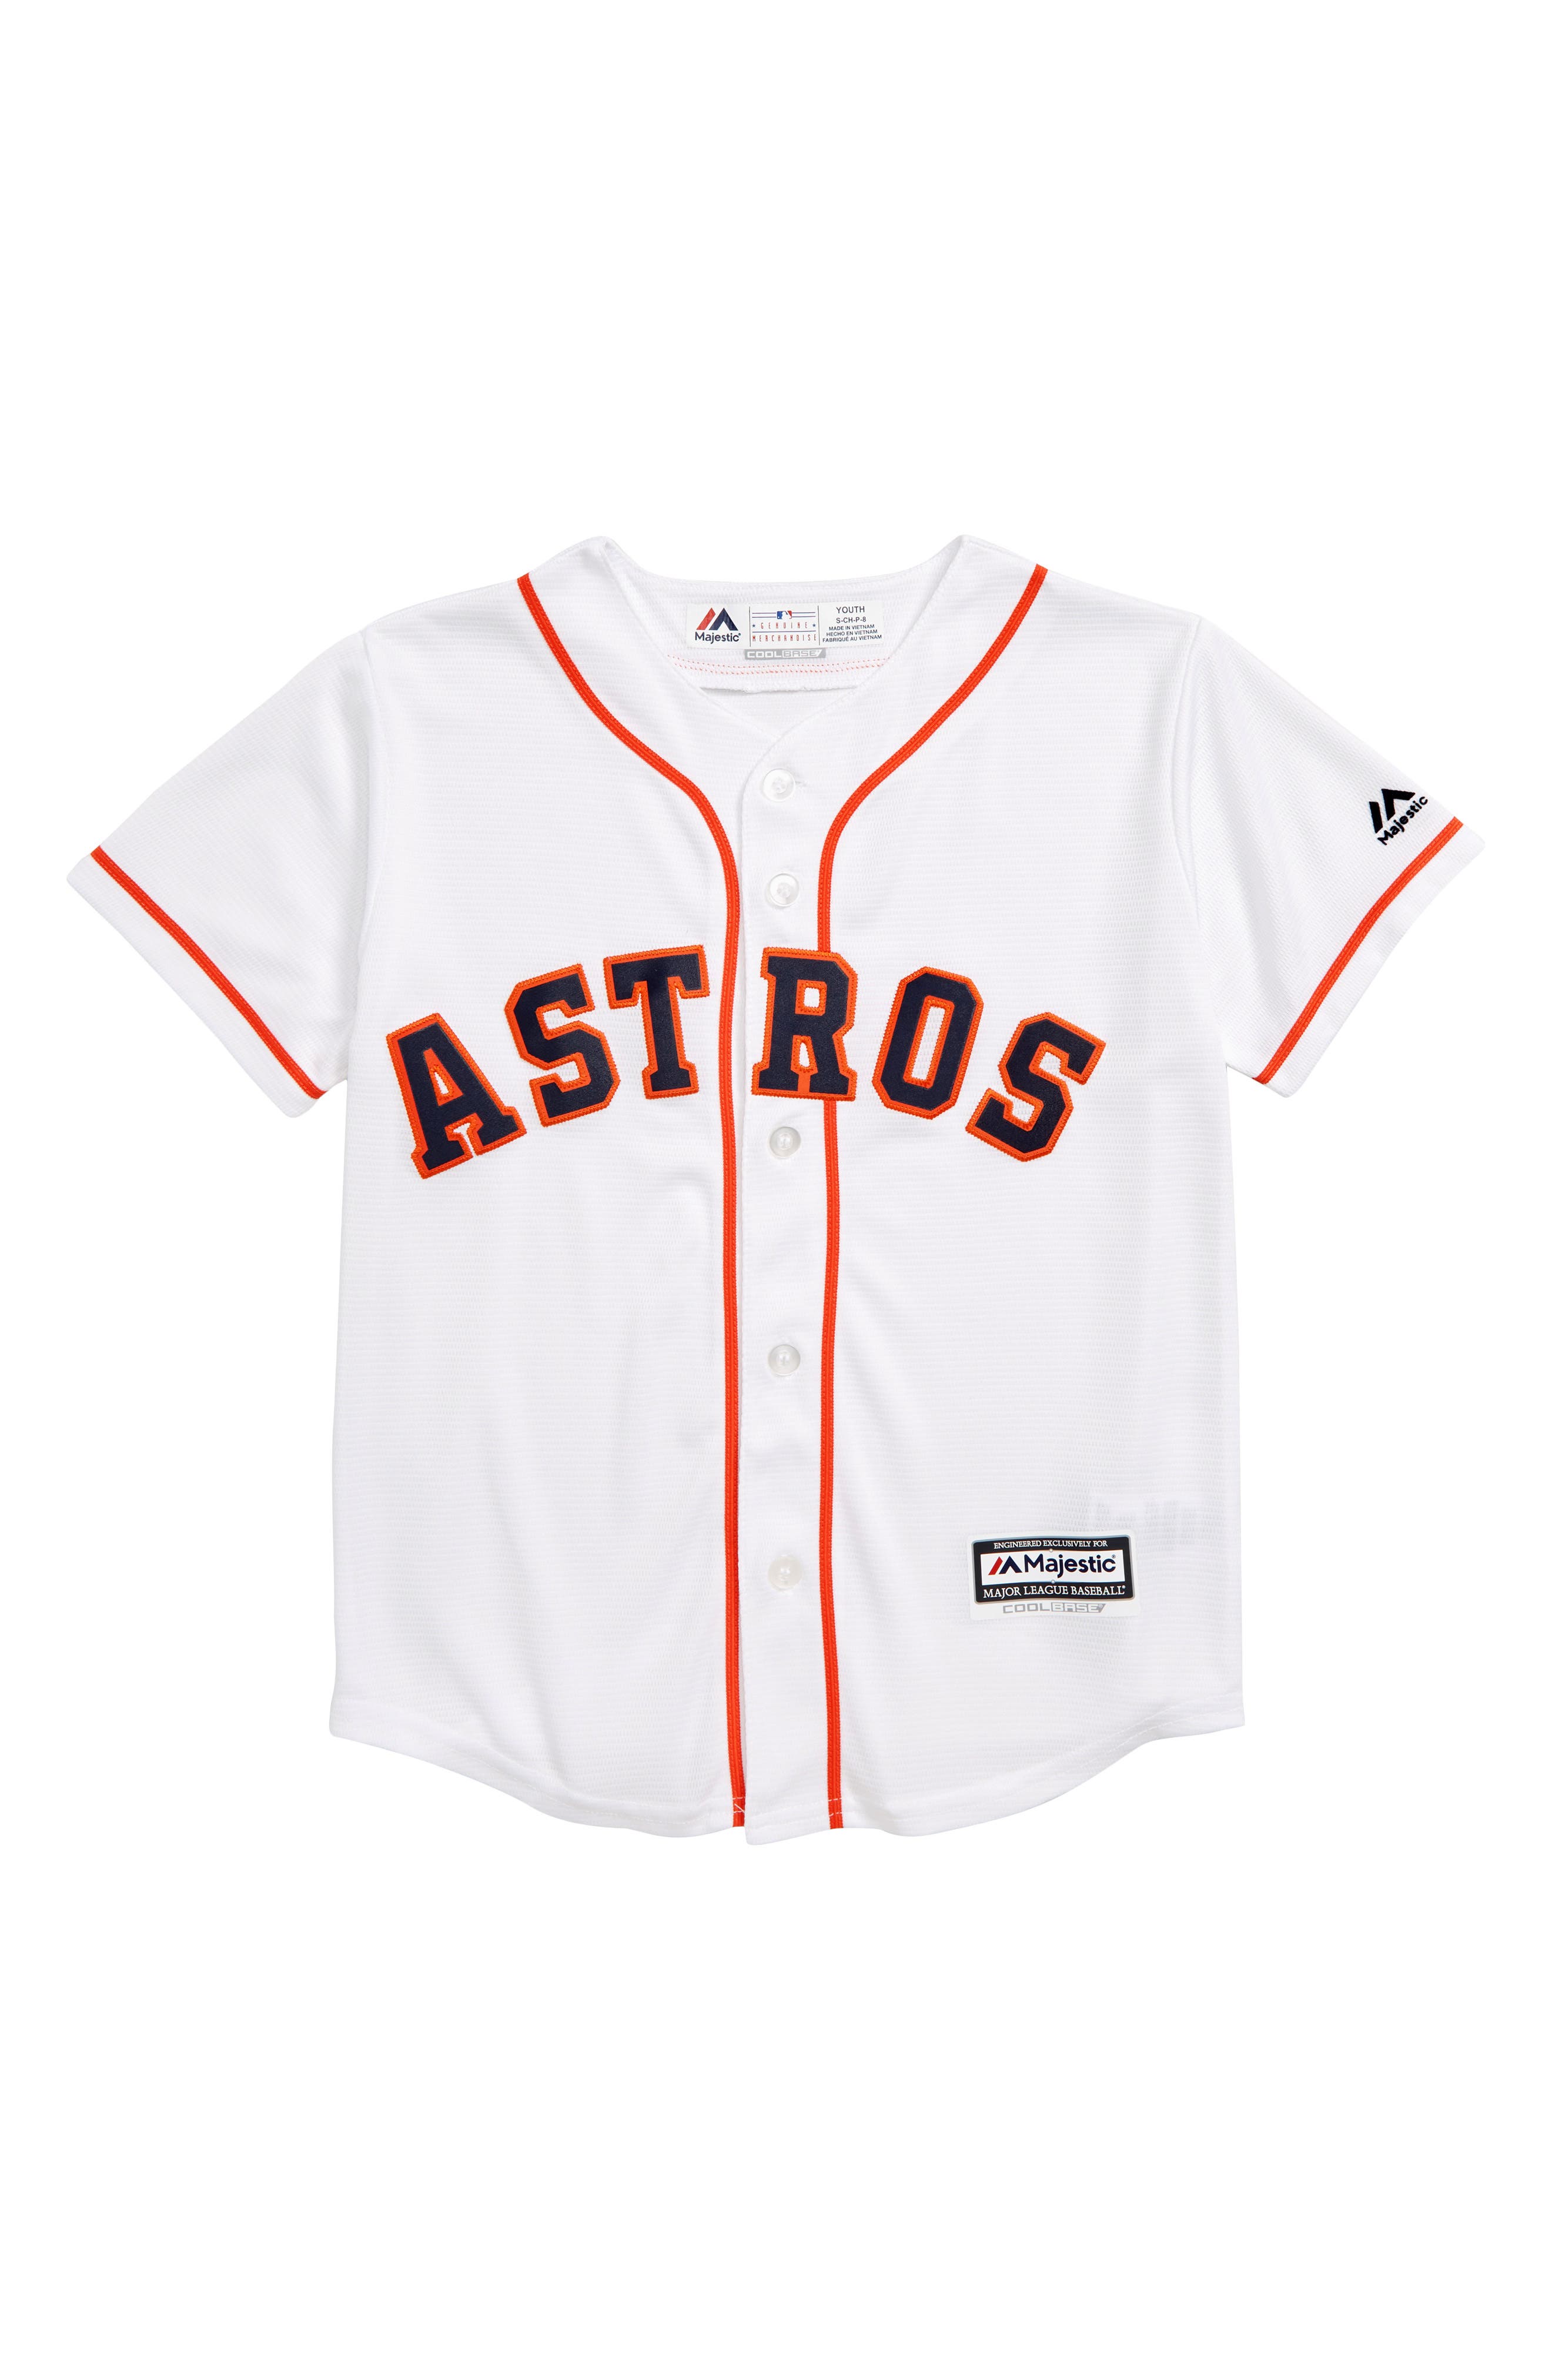 astros baseball jersey